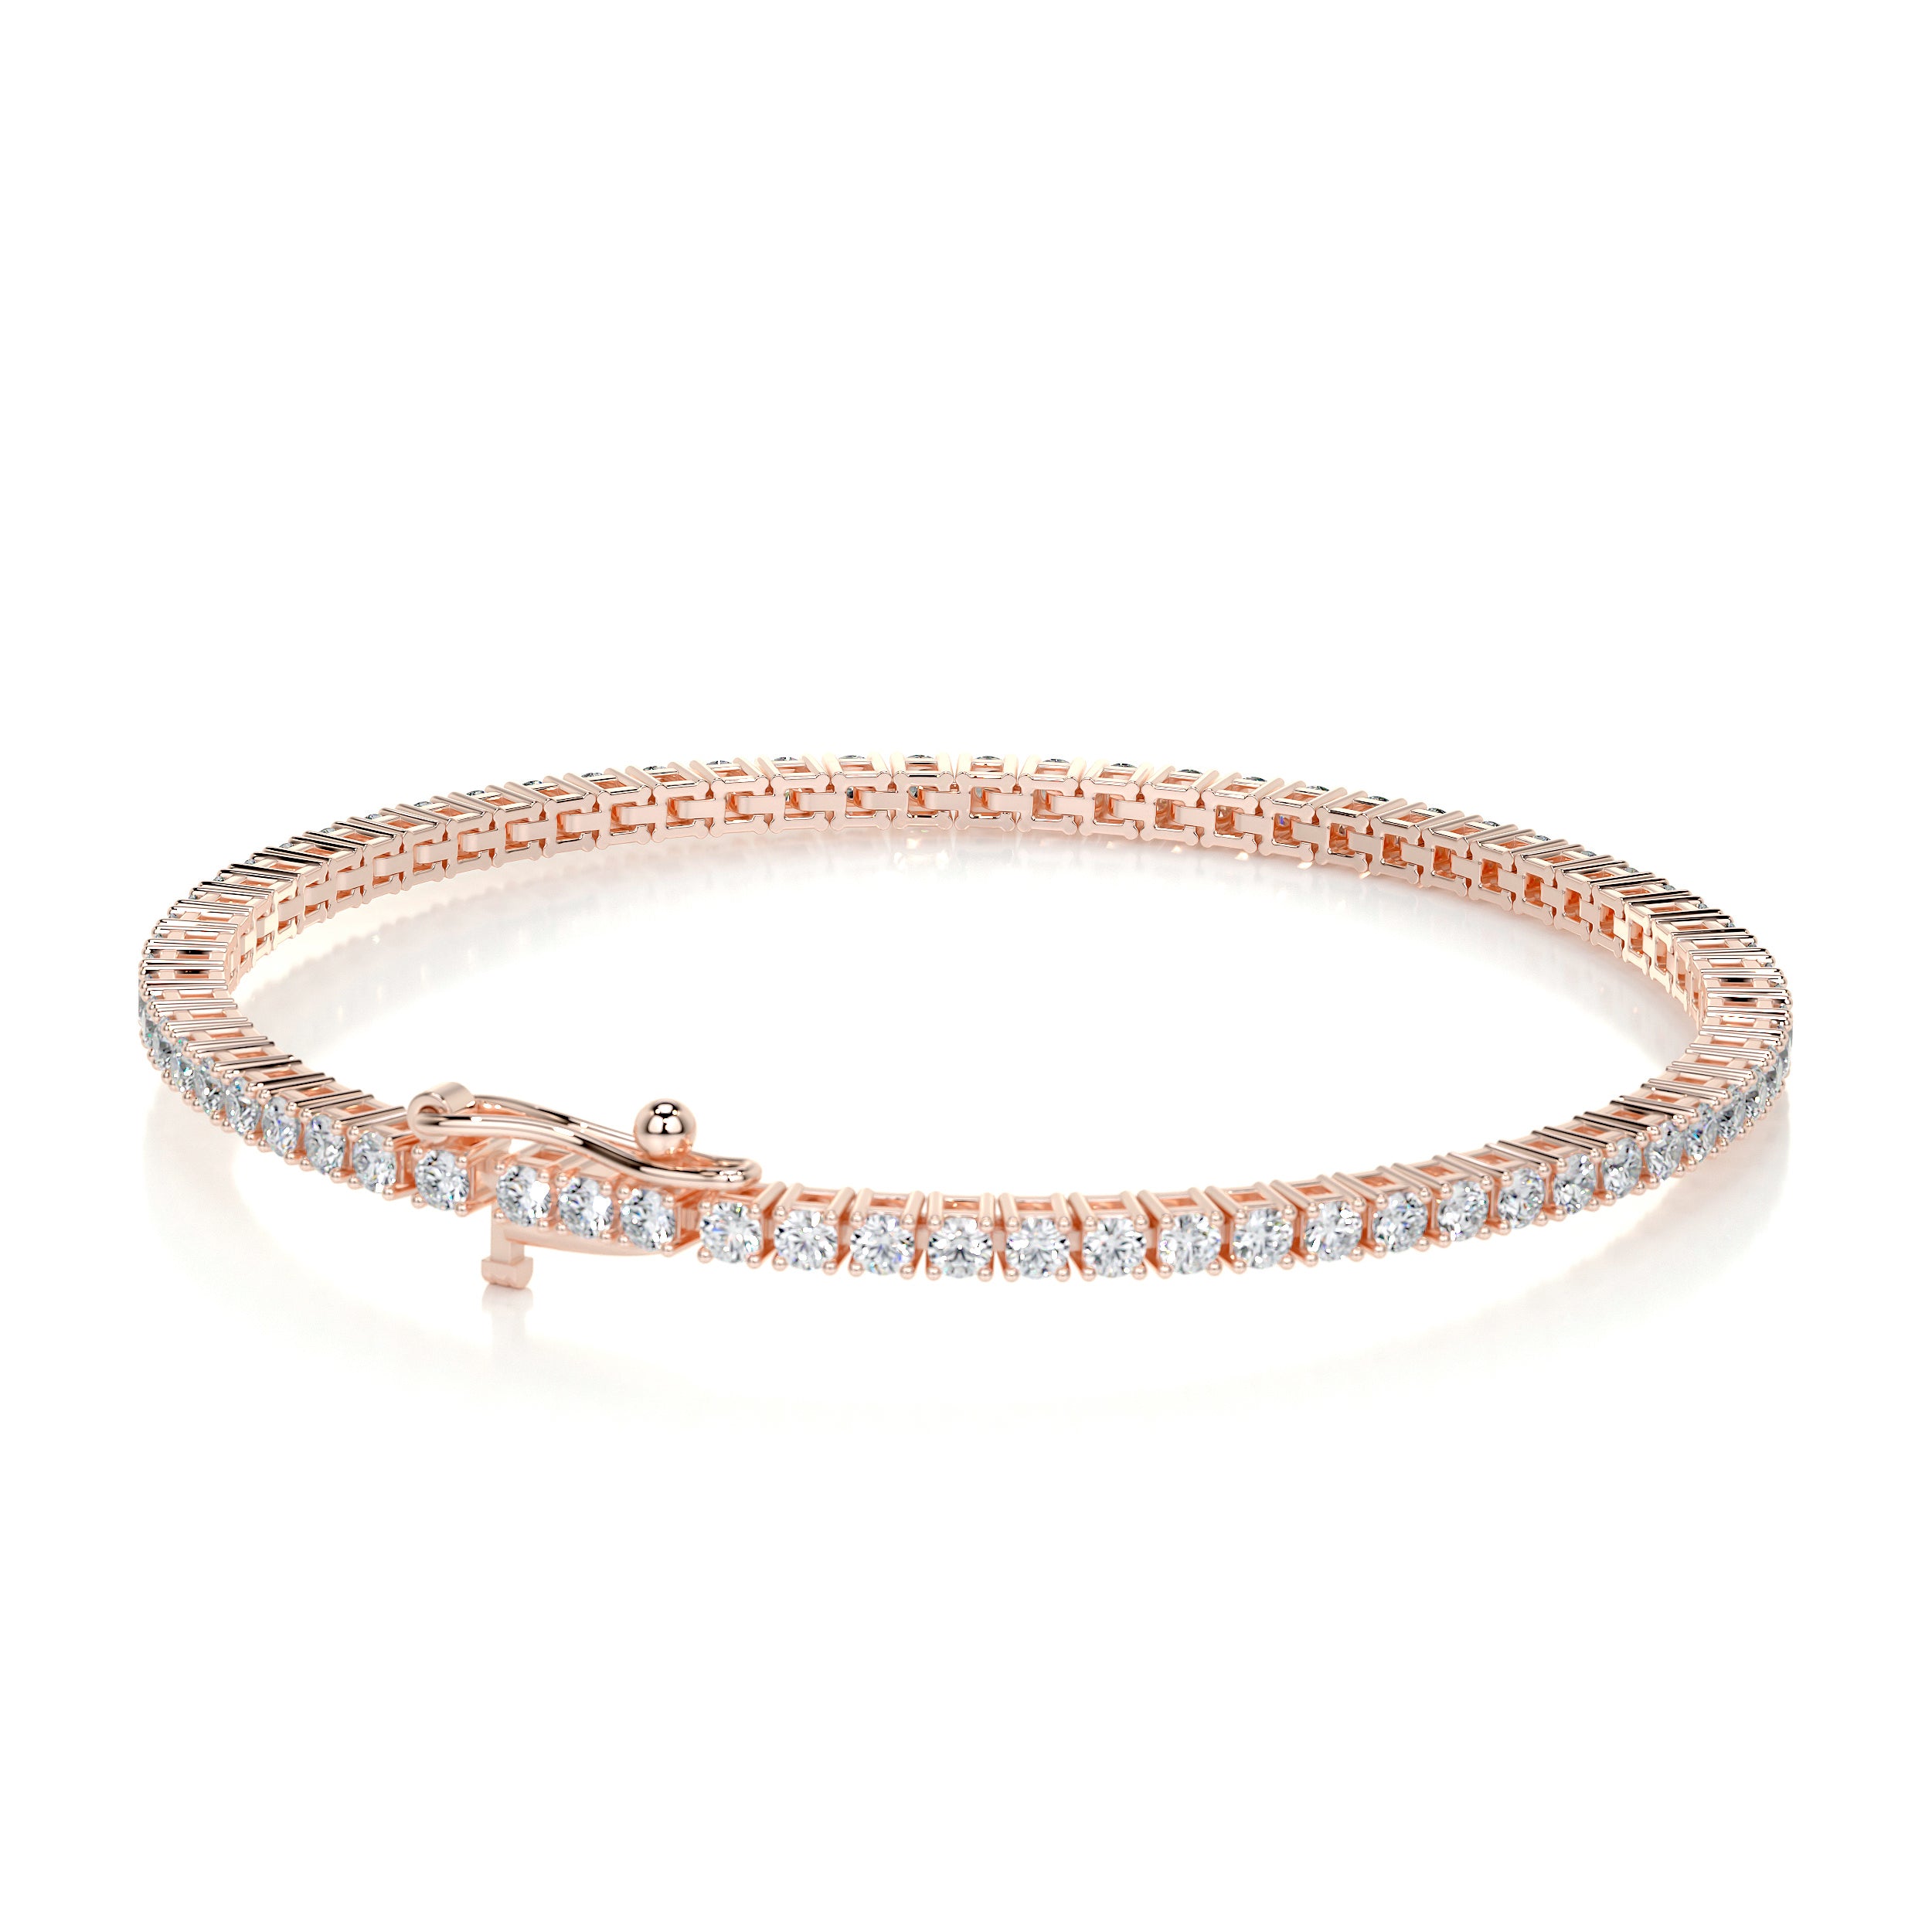 Sidney Tennis Diamonds Bracelet -14K Rose Gold